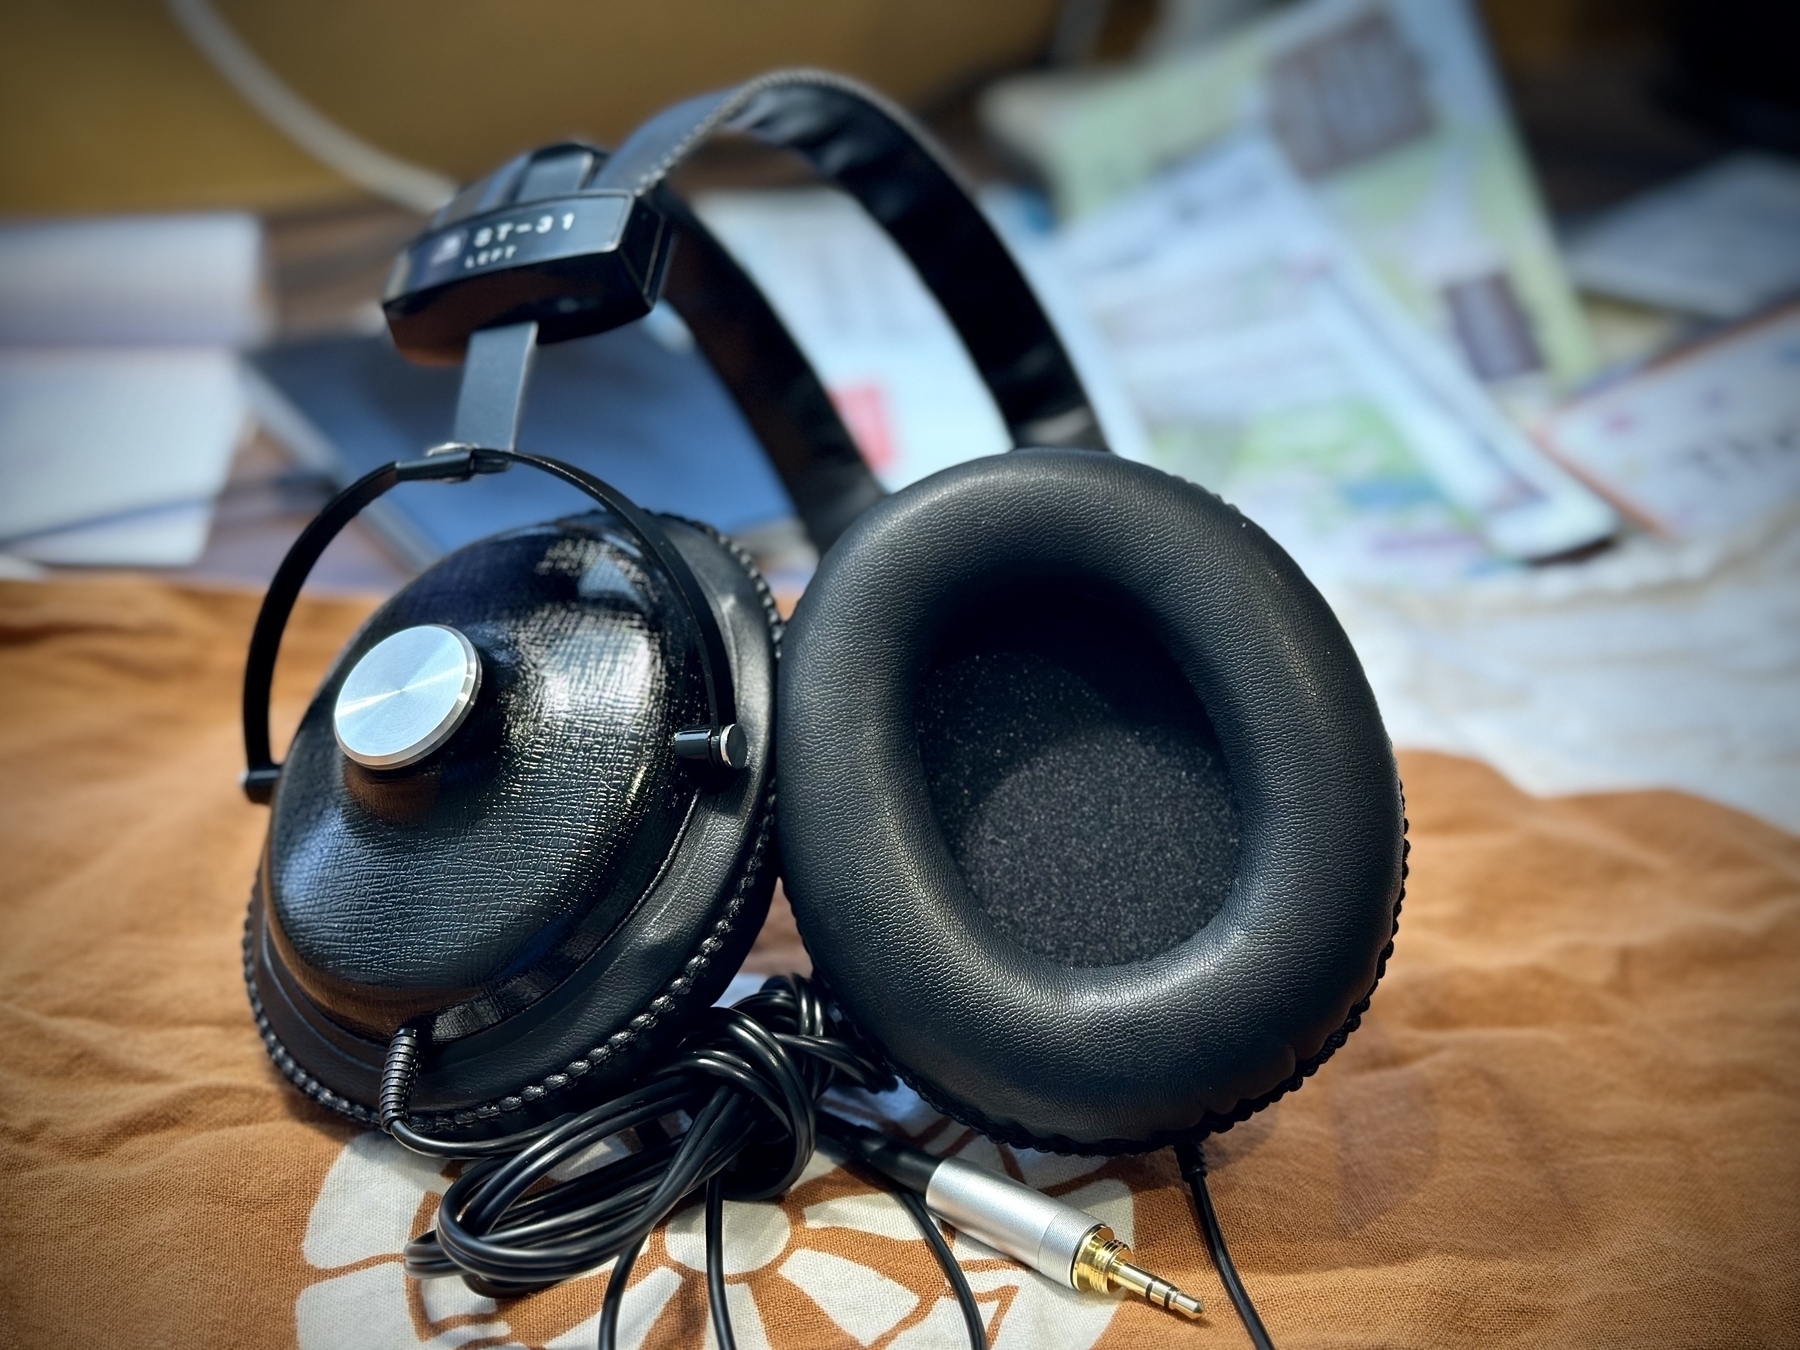 Wired Headphones from AshidaVox sitting on a tenugui cloth. 